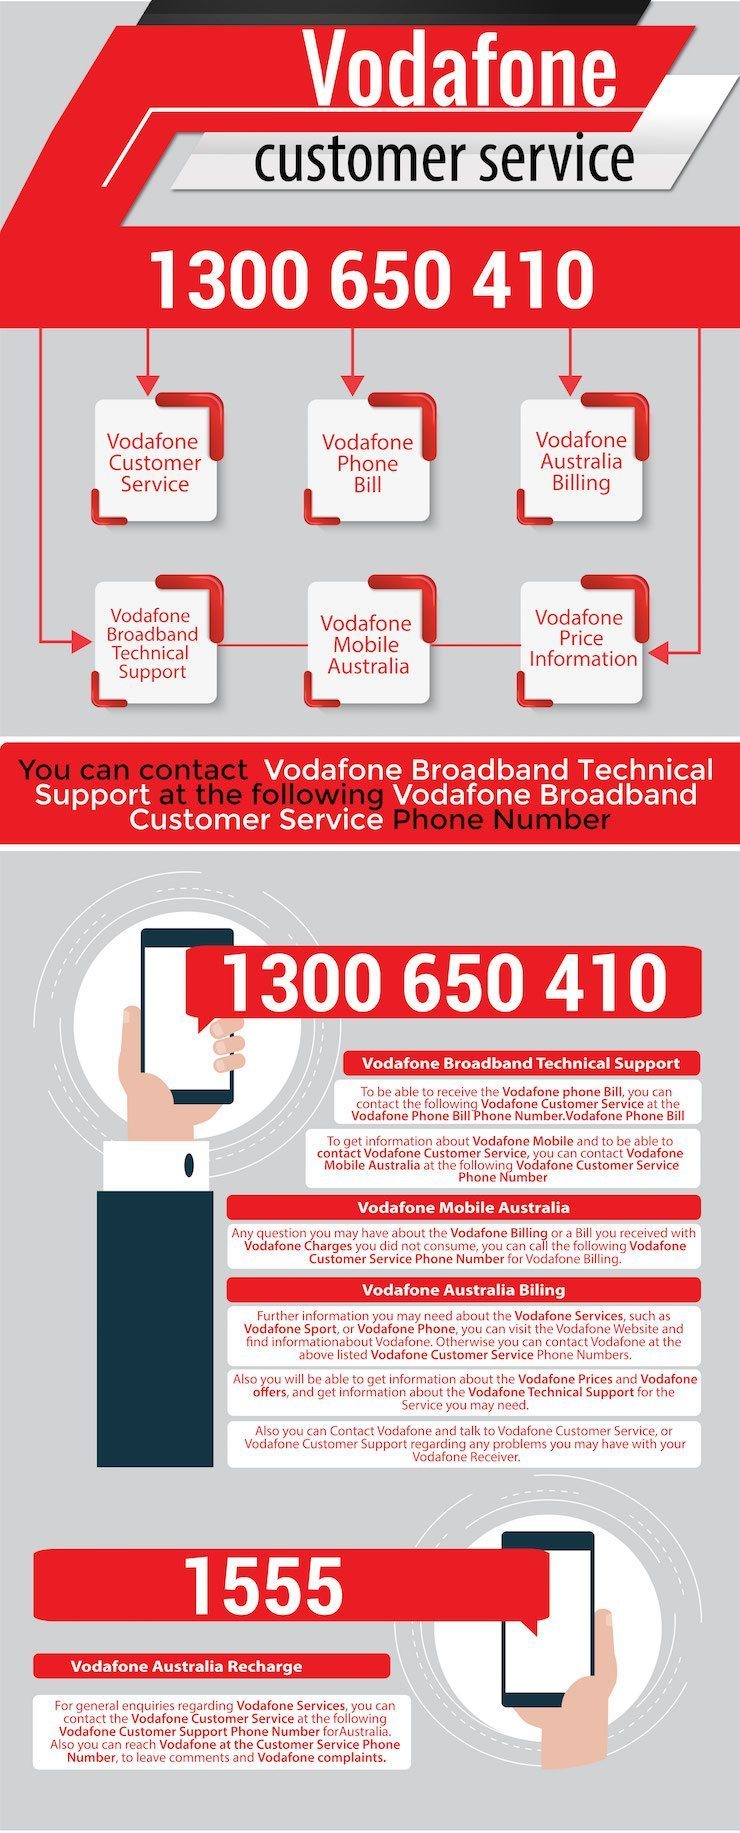 Vodafone Australia Customer Support Team